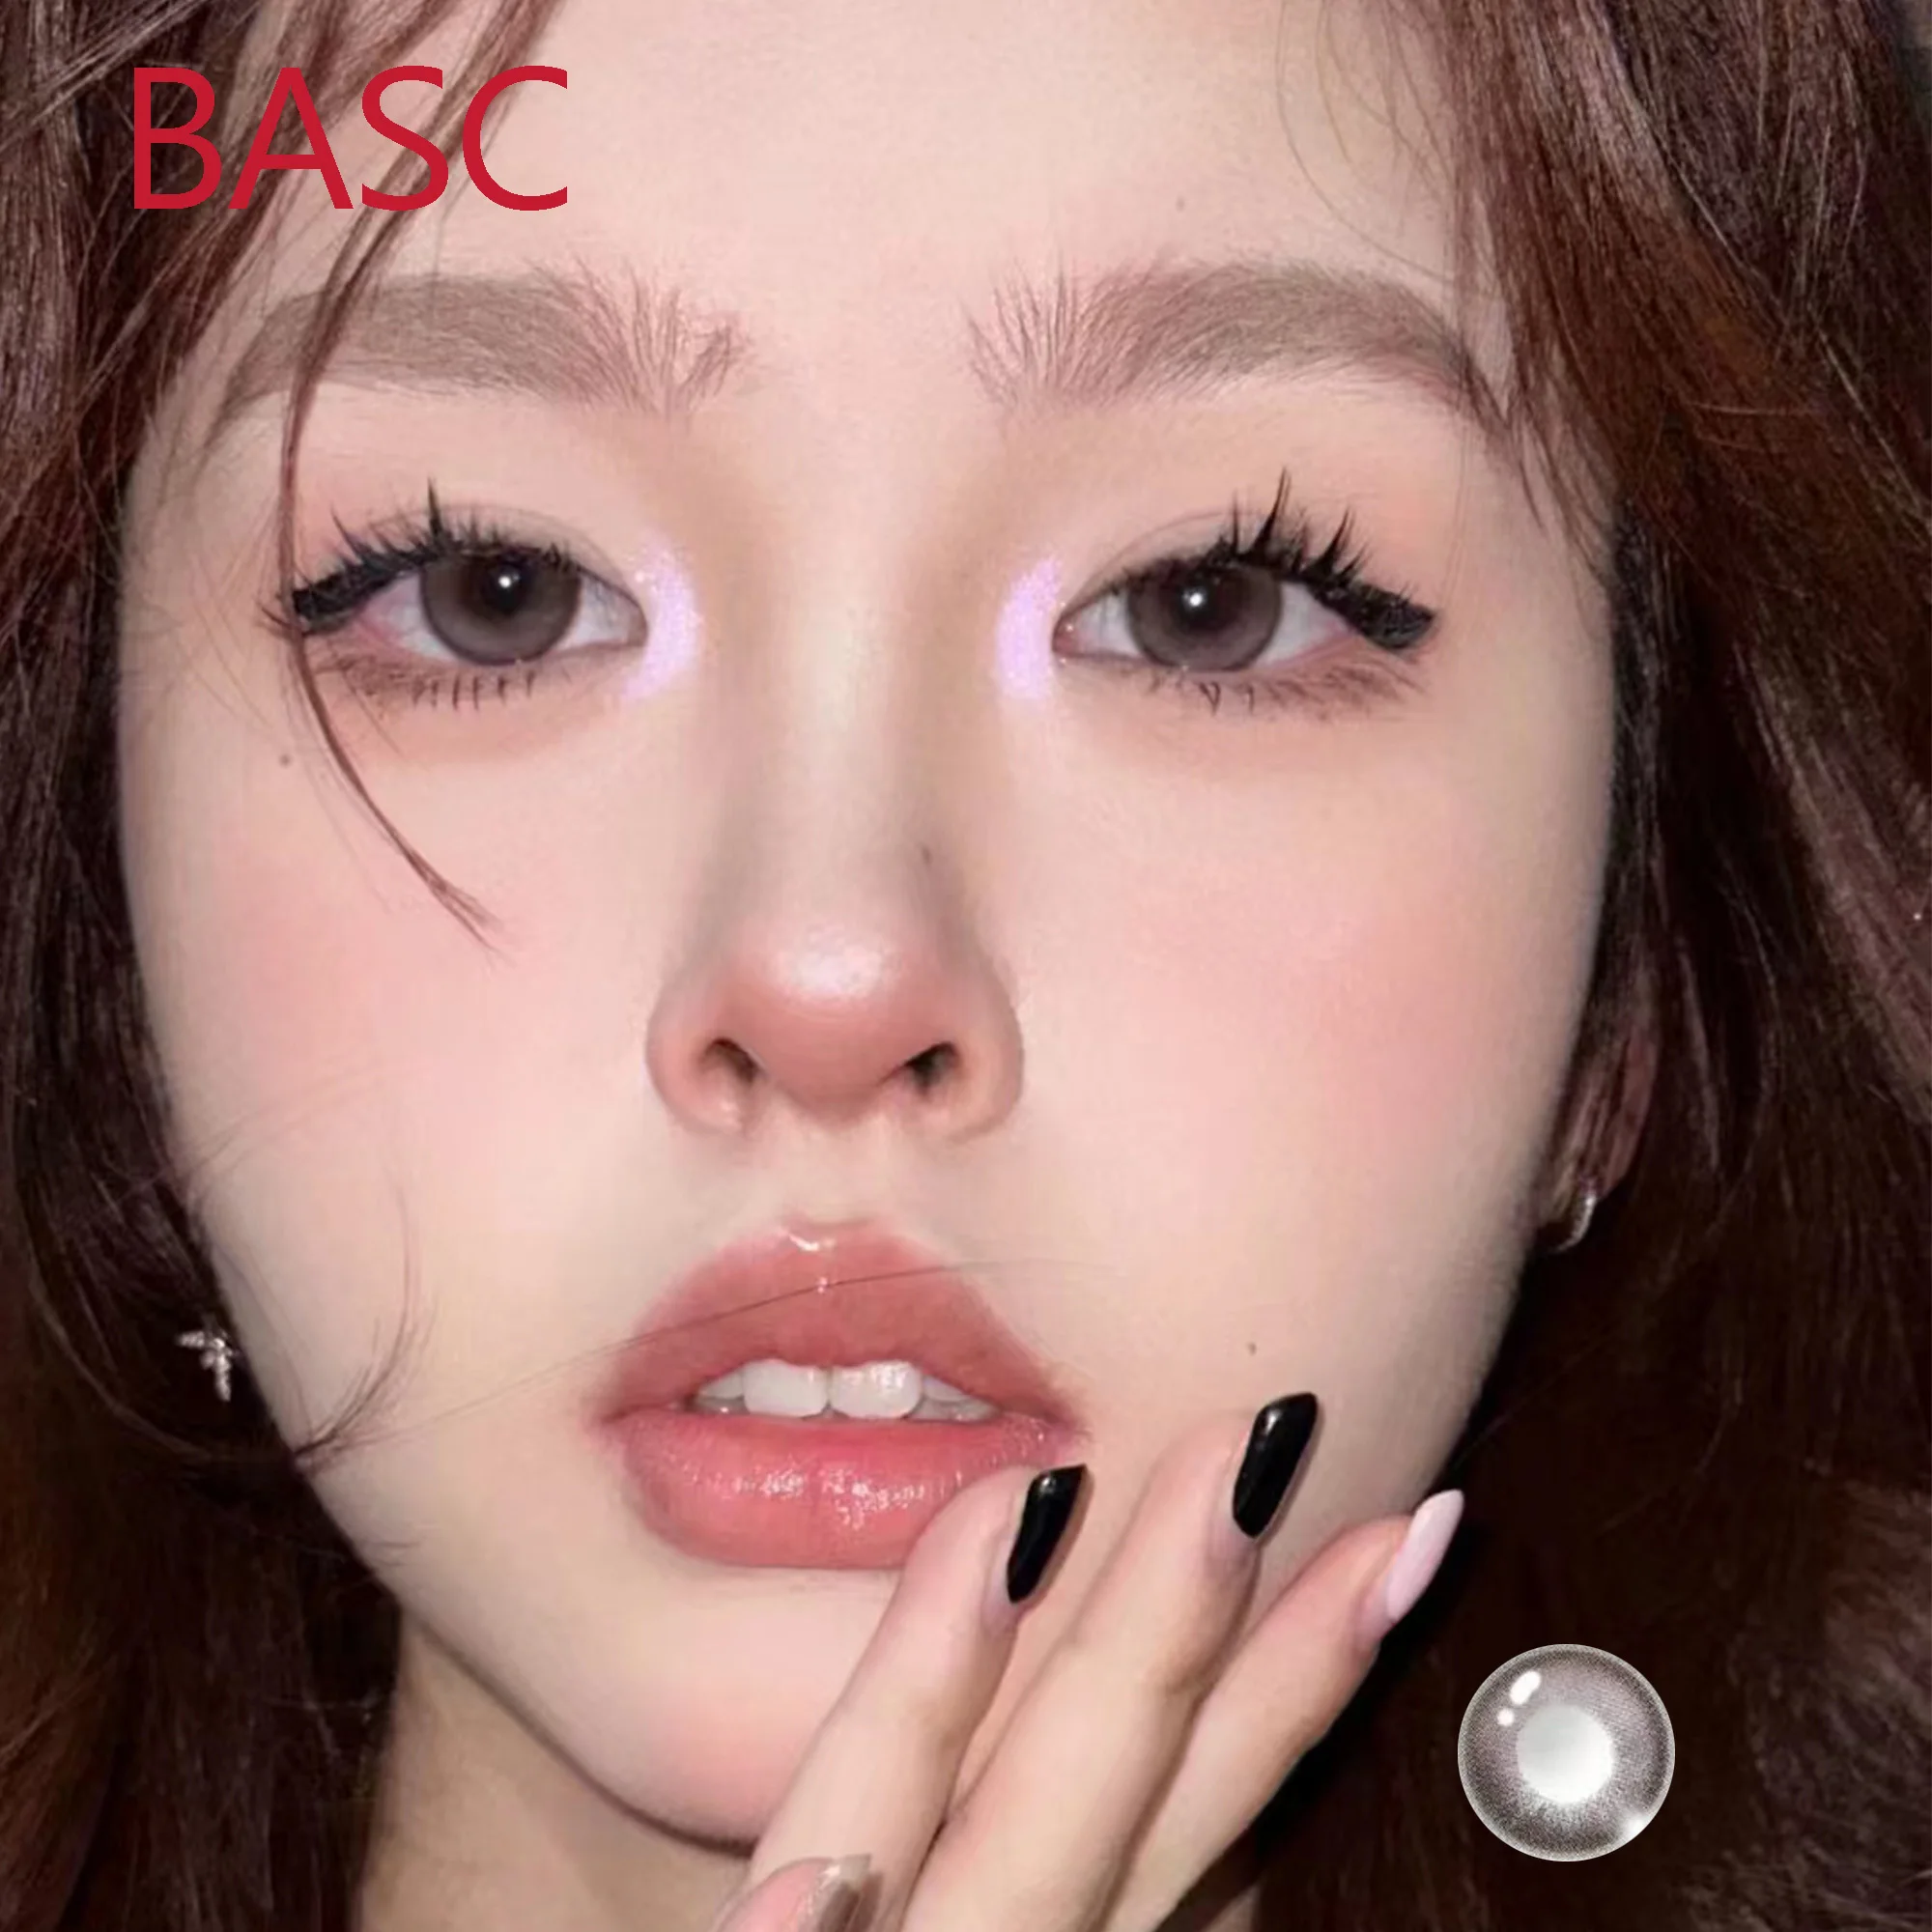 

ViviGo 14.20mm Women Men Soft Contacts Lenses with Power Eyes Color Accessories lentes de contacto Basc Rose